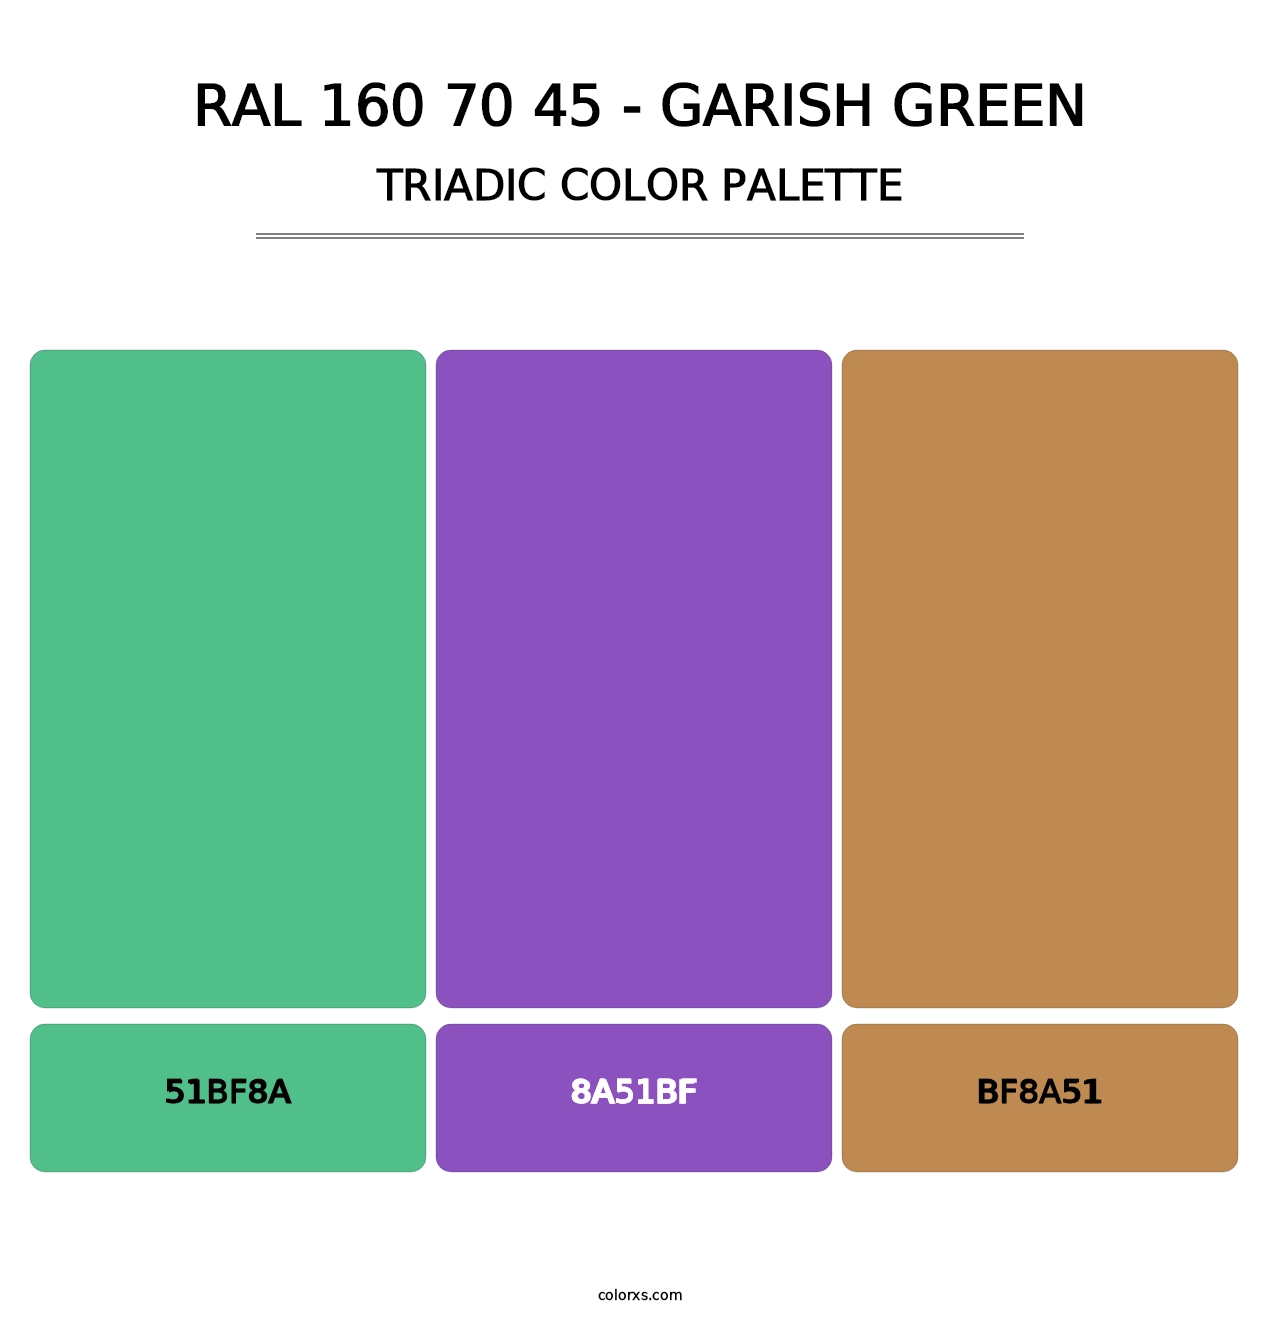 RAL 160 70 45 - Garish Green - Triadic Color Palette